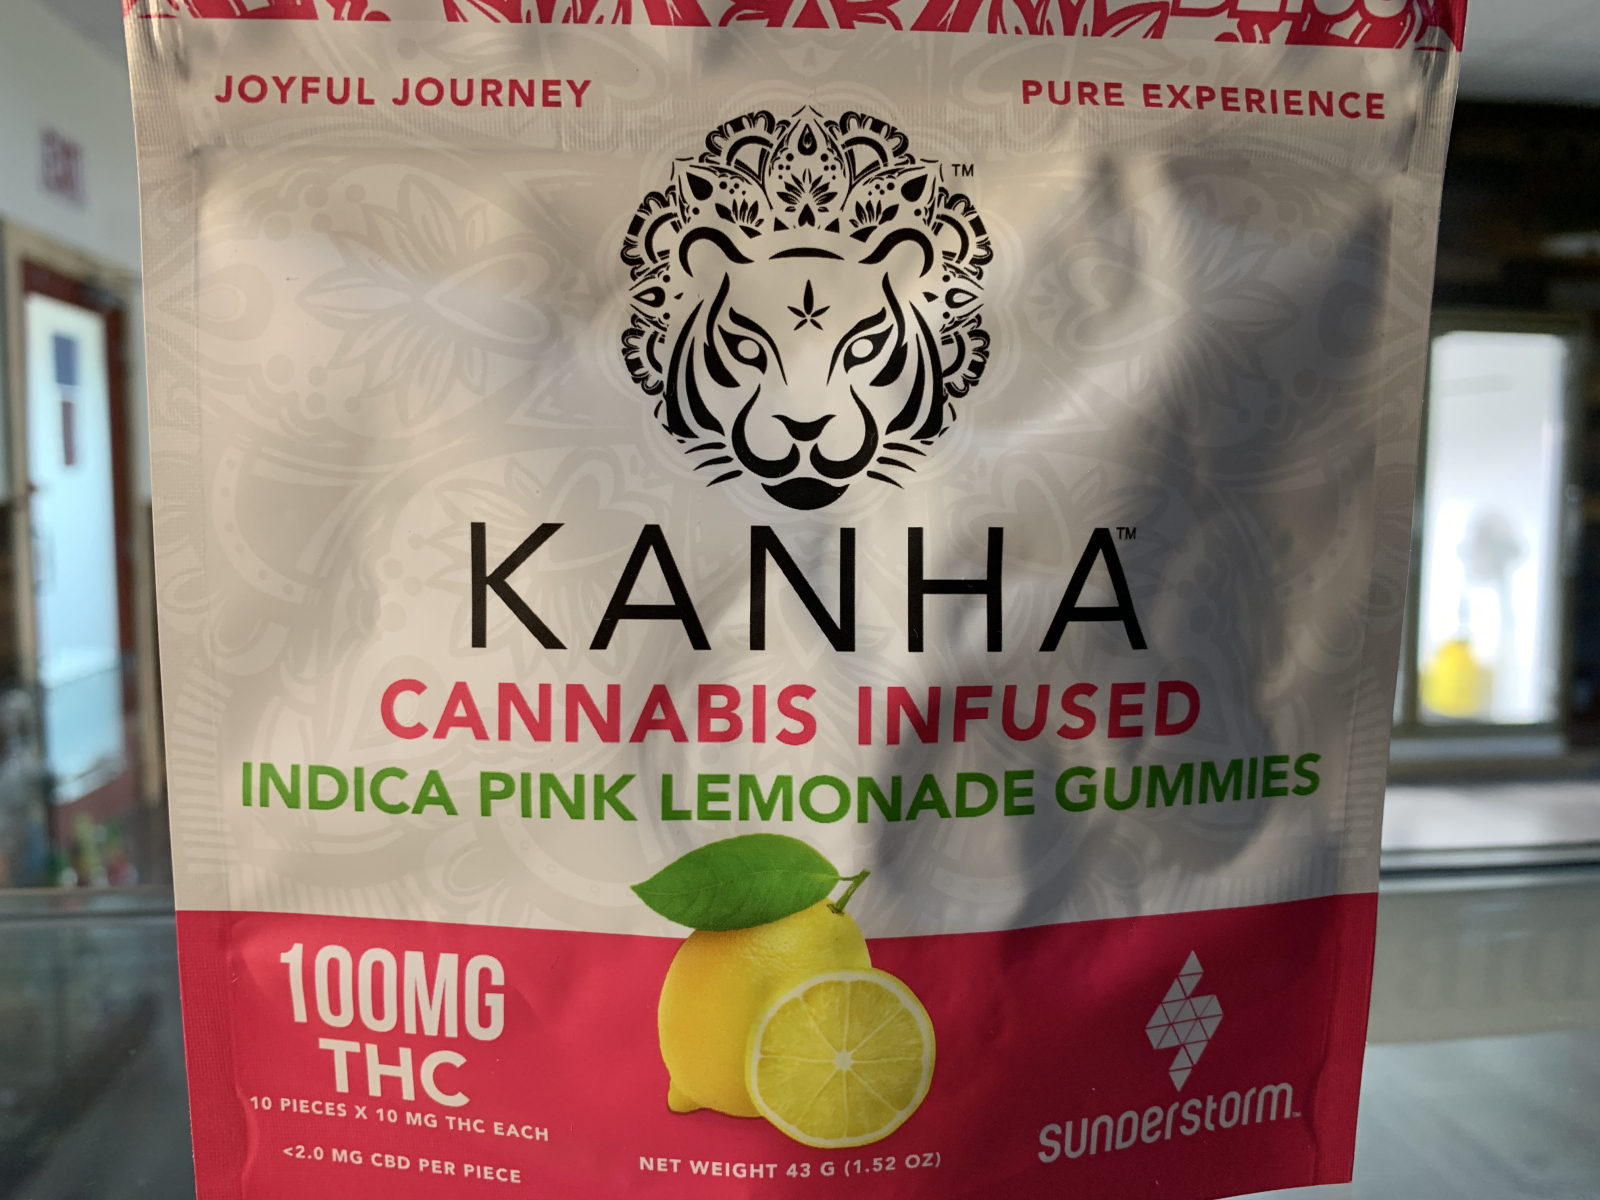 Kanha indica pink lemonade gummies